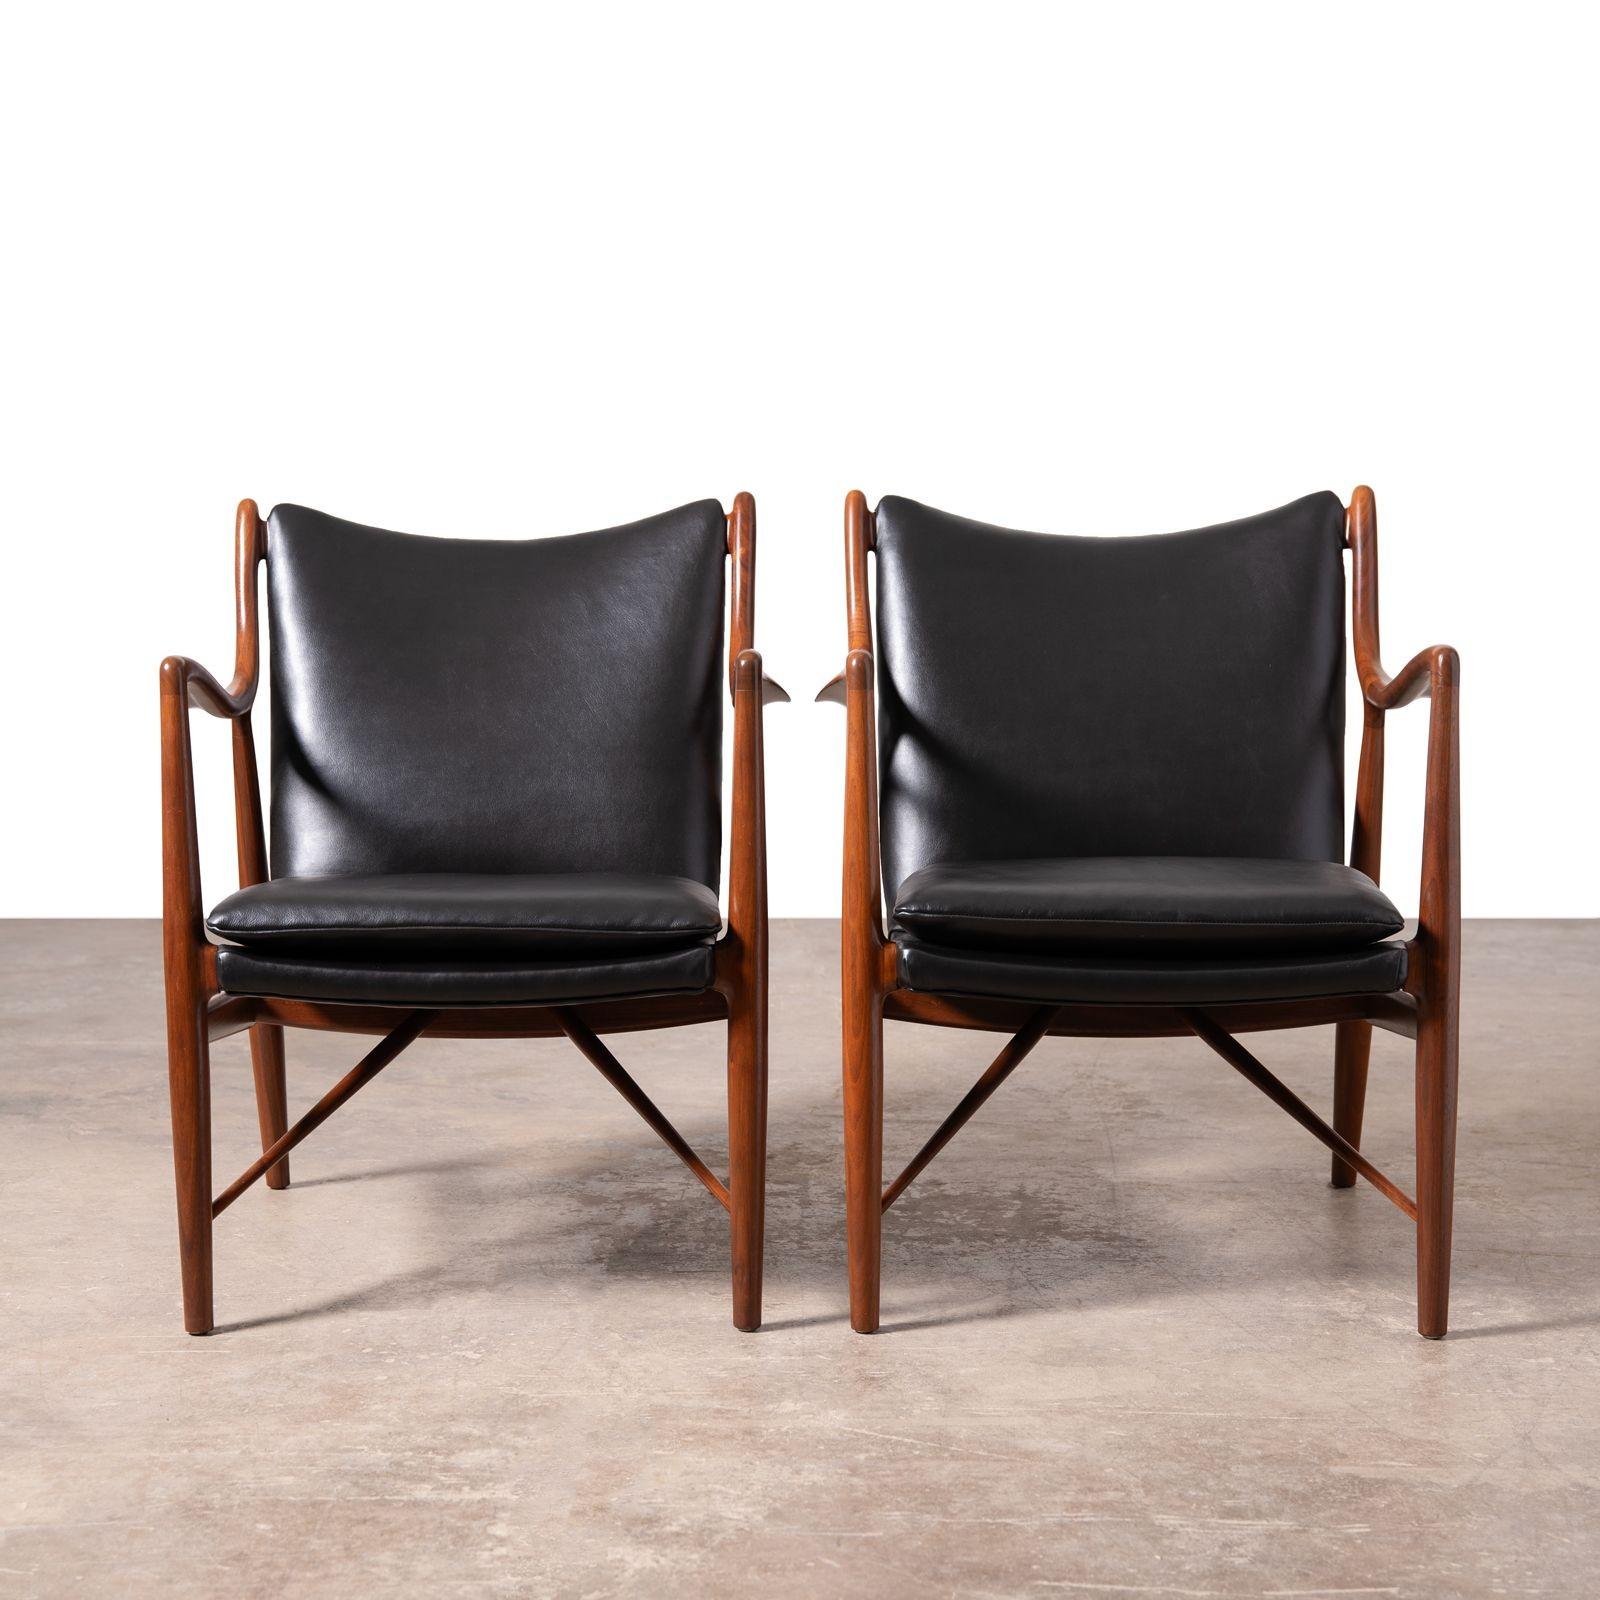 Finn Juhl NV-45 Scandinavian Lounge Chairs in Walnut and Black Leather 1950s For Sale 3